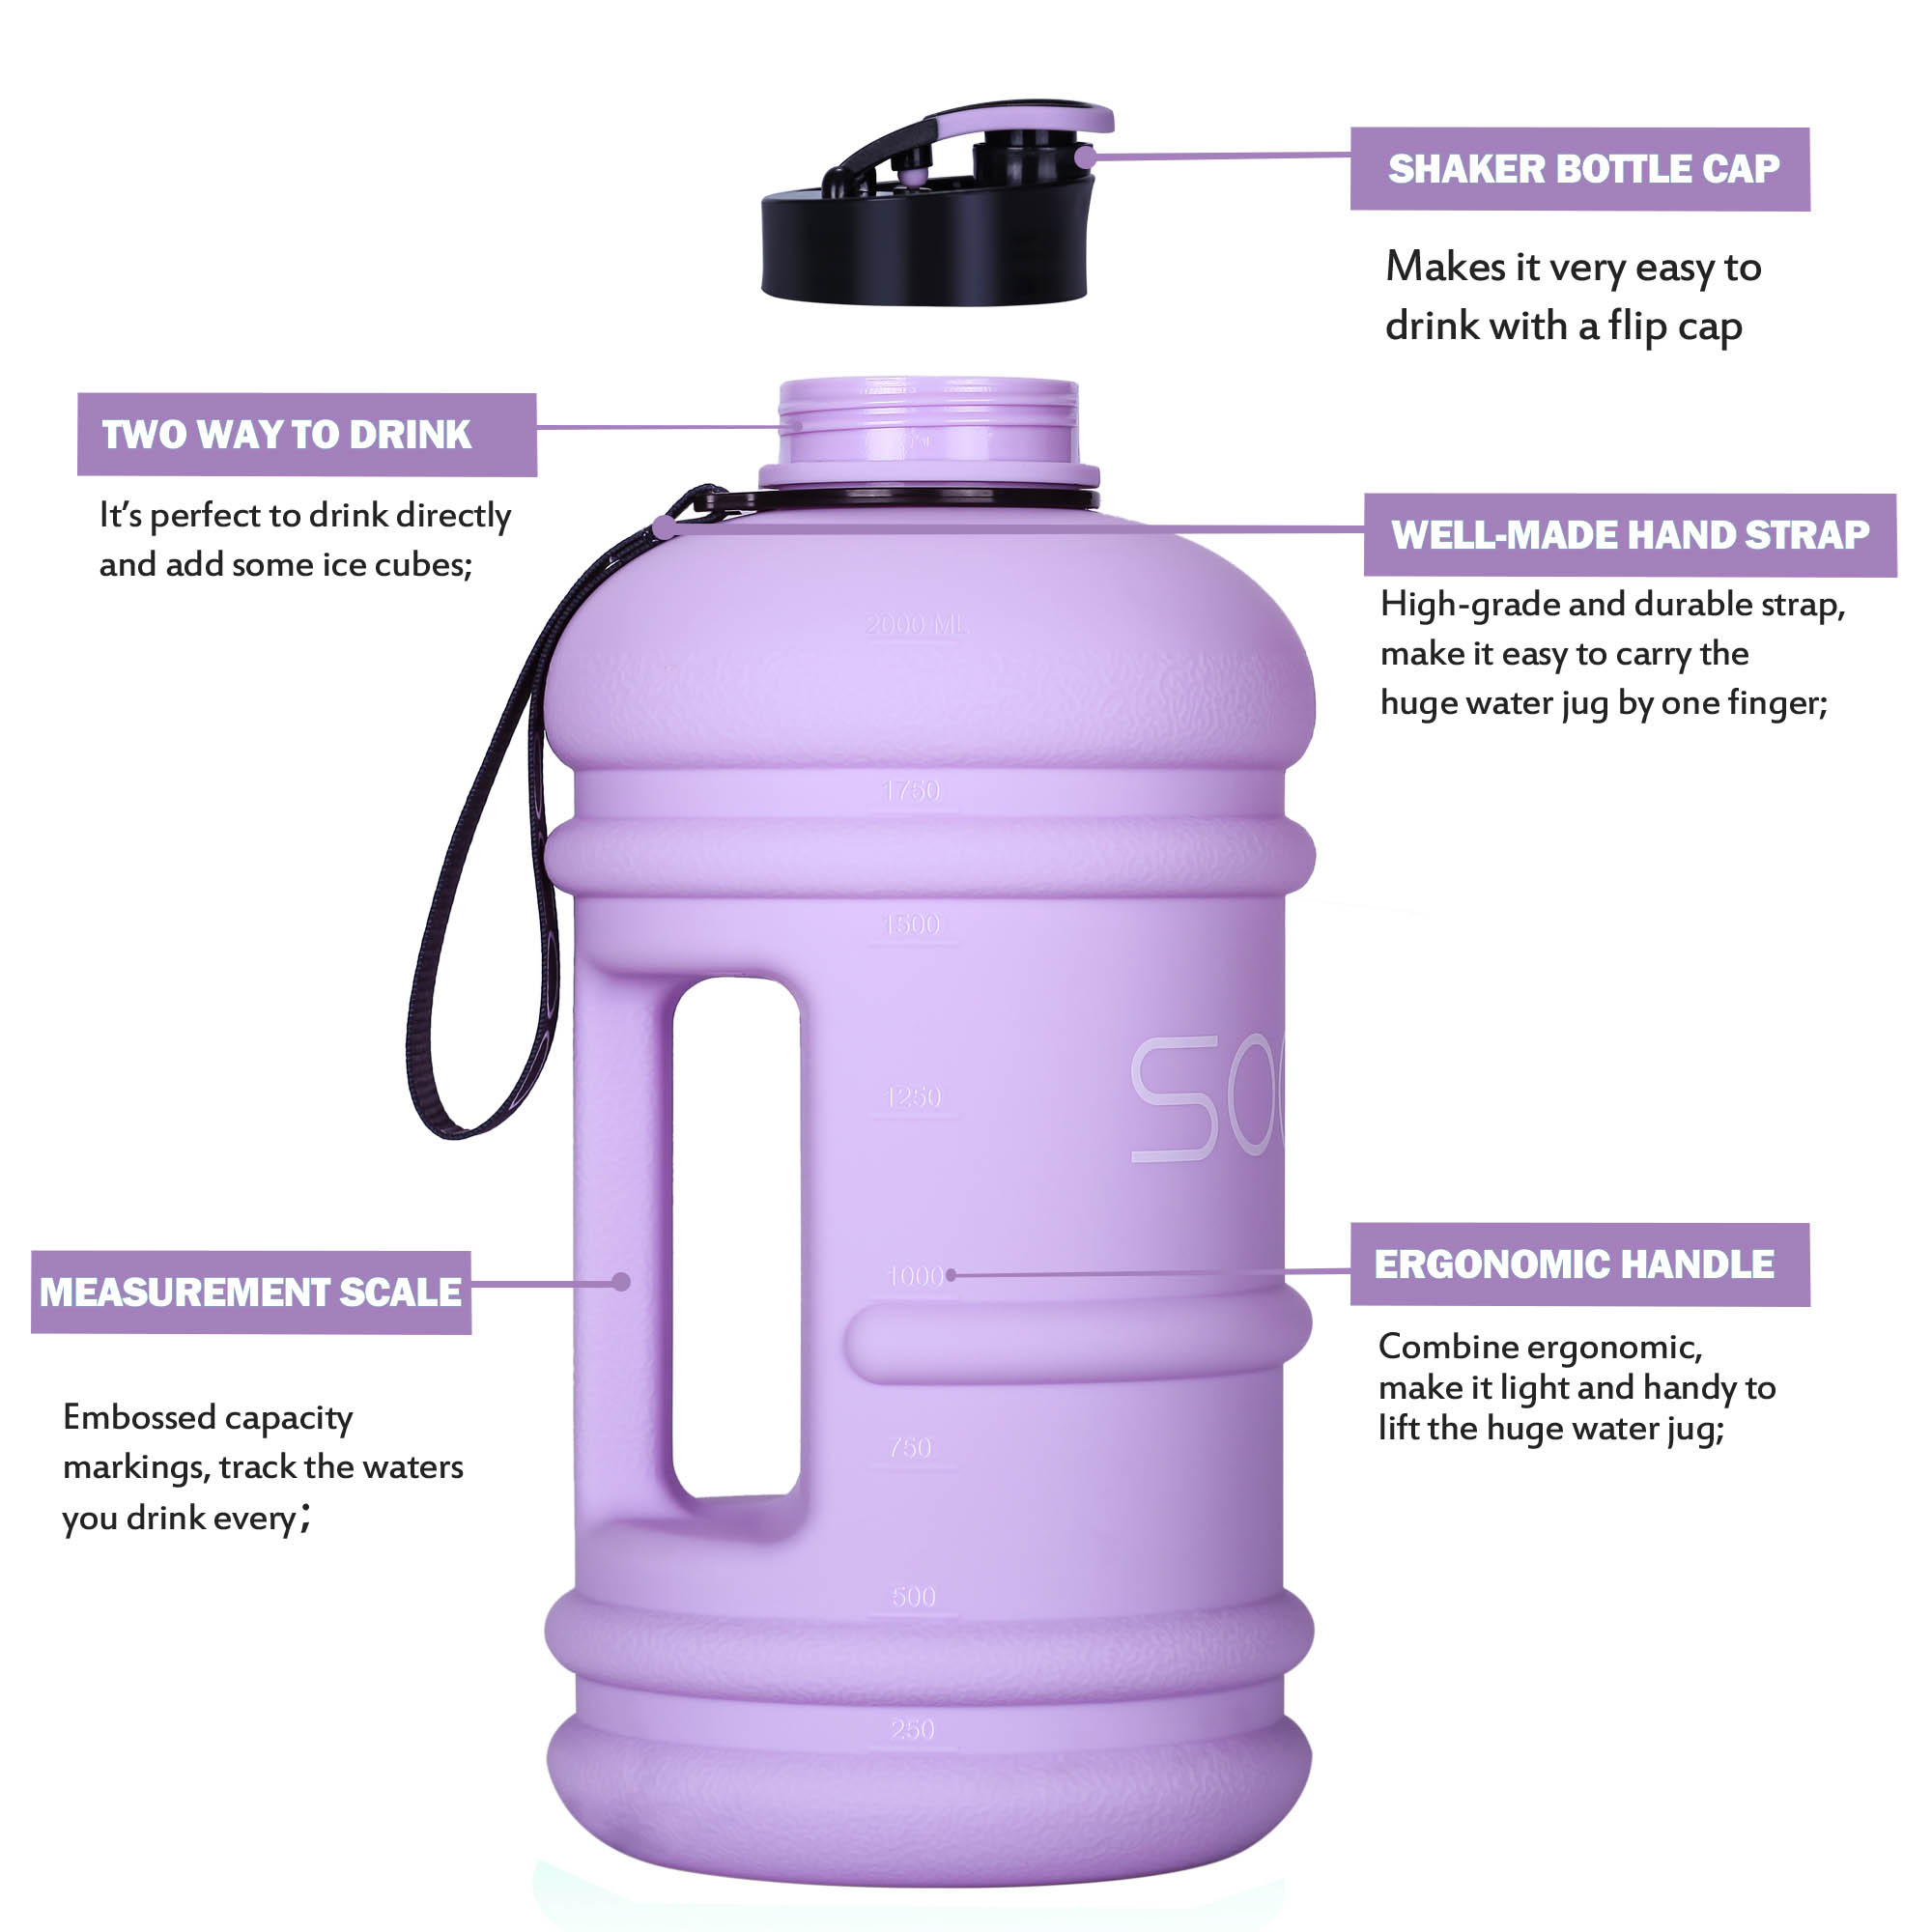 FUNUS Big Water Bottle BPA Free Half Gallon Water Bottle Hydro Jug Reusable  Water Bottle with Straw for Men Women Fitness Sport (Army Green, 2.2L)